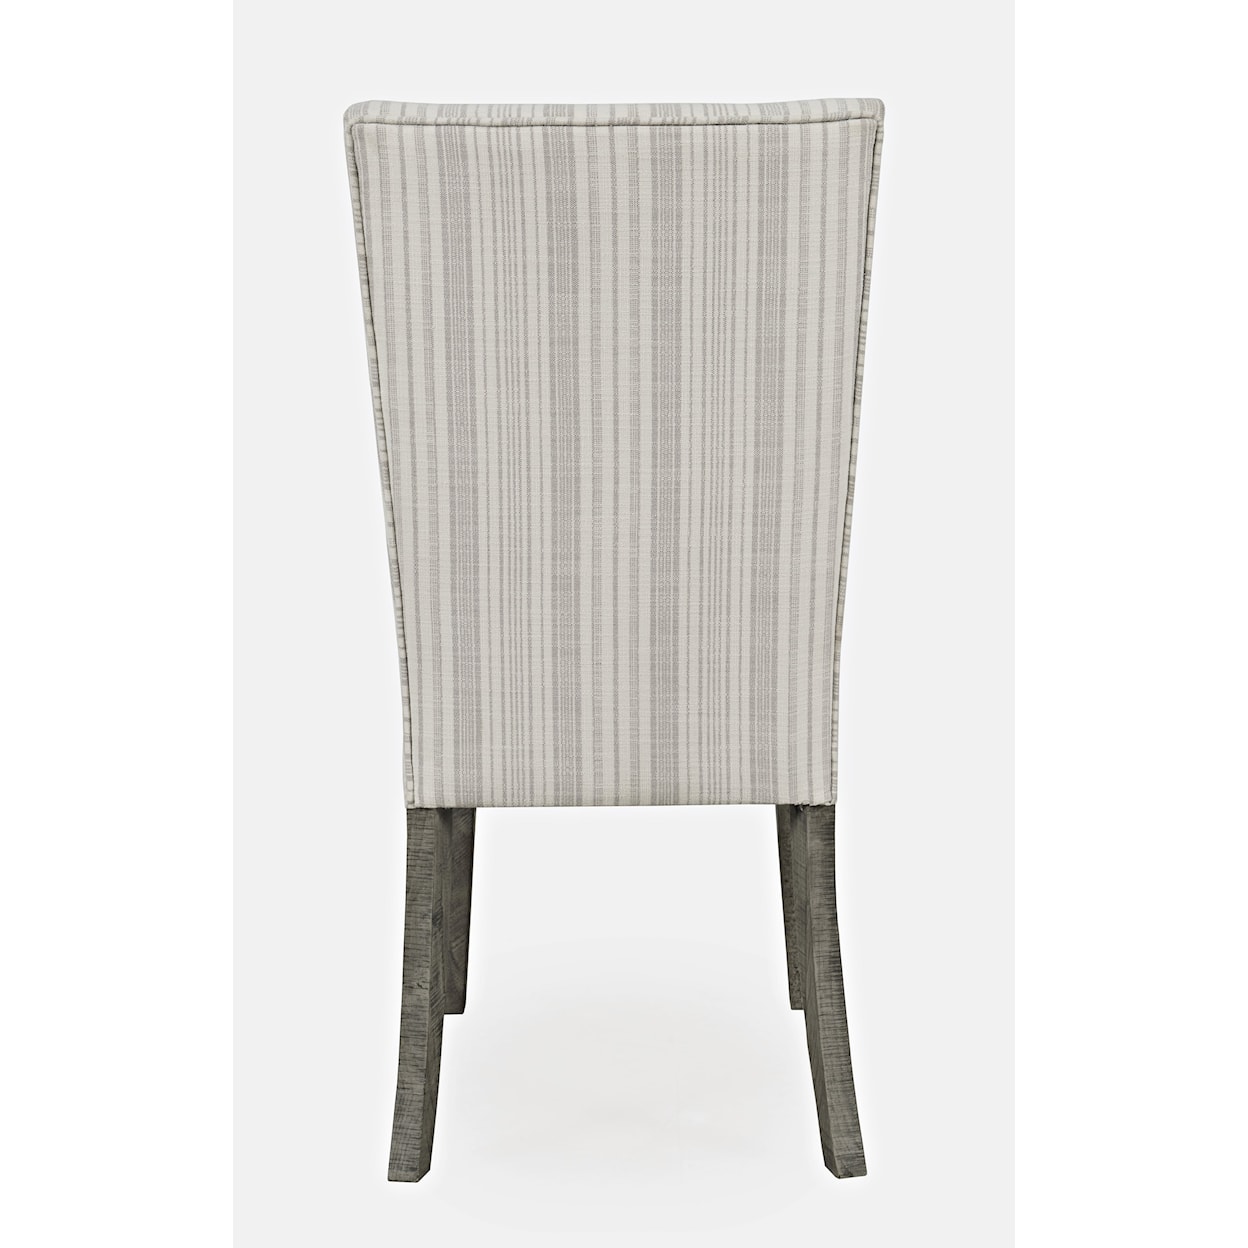 VFM Signature Telluride Upholstered Dining Chair